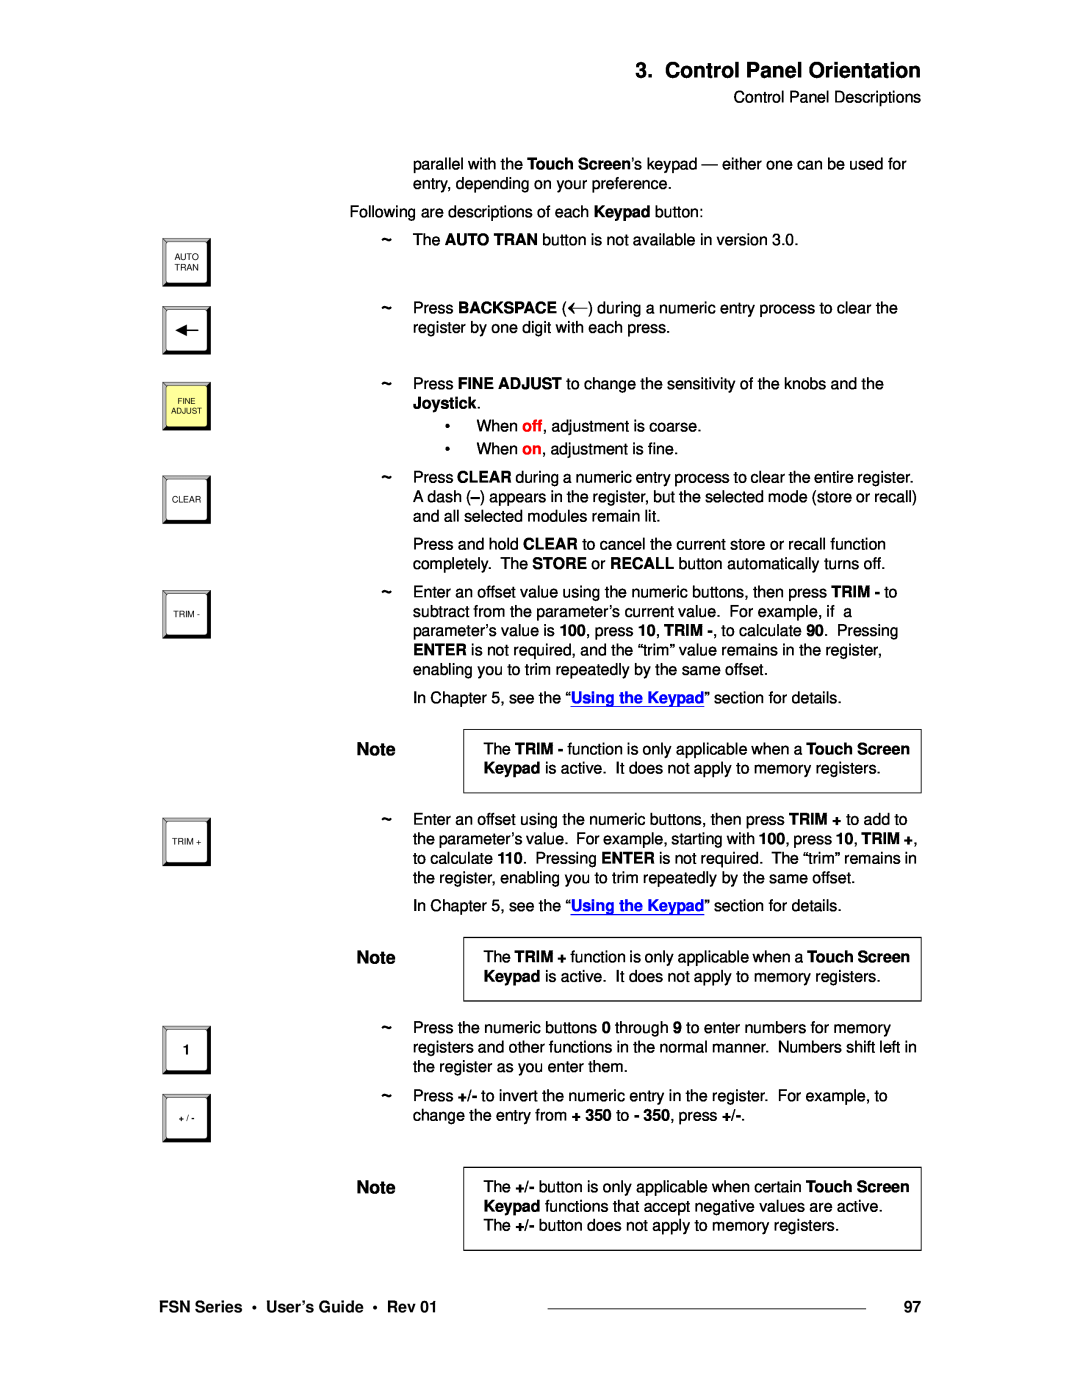 Barco 26-0702000-00 manual Control Panel Orientation, FSN Series • User’s Guide • Rev 